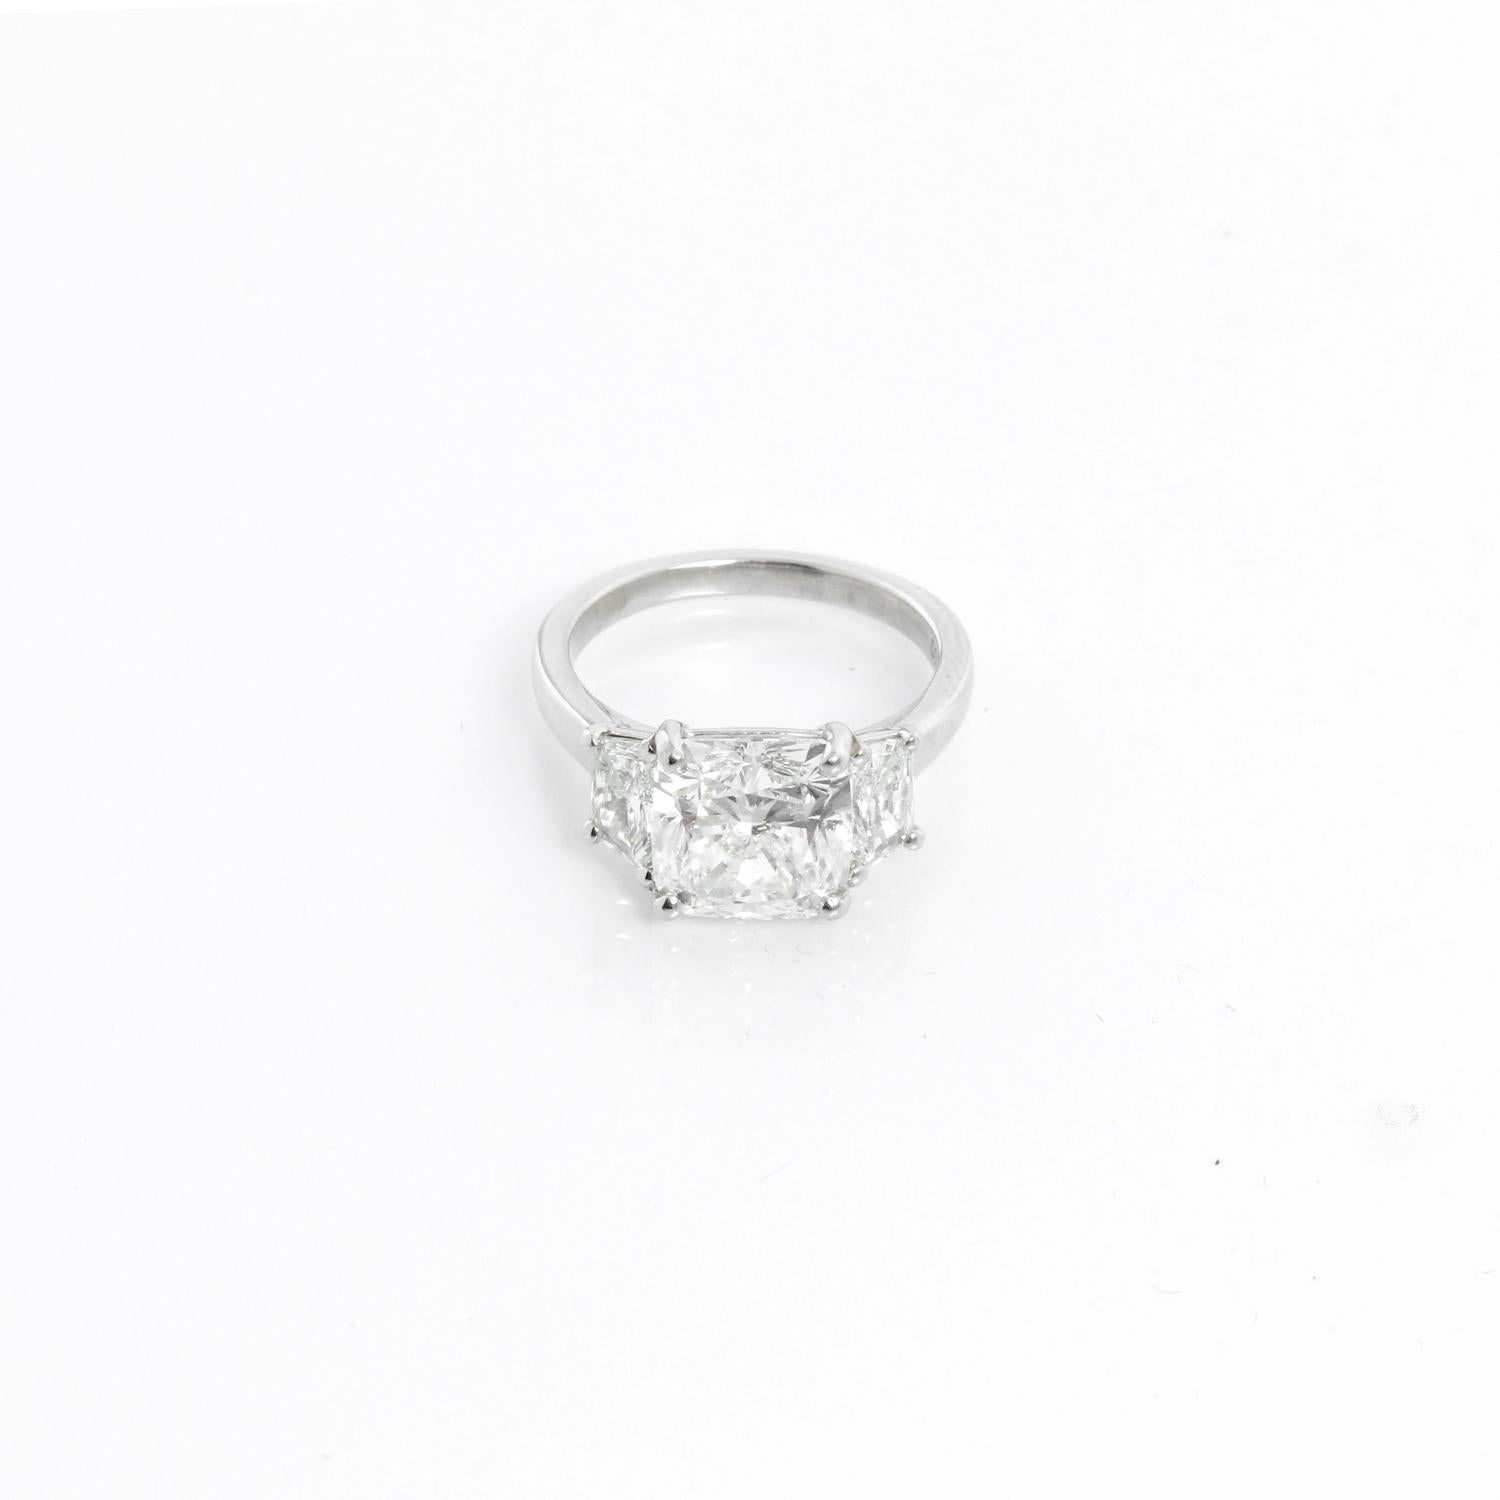 3.24 Carat Cushion Cut Diamond Engagement Ring Size 4.5 For Sale 1